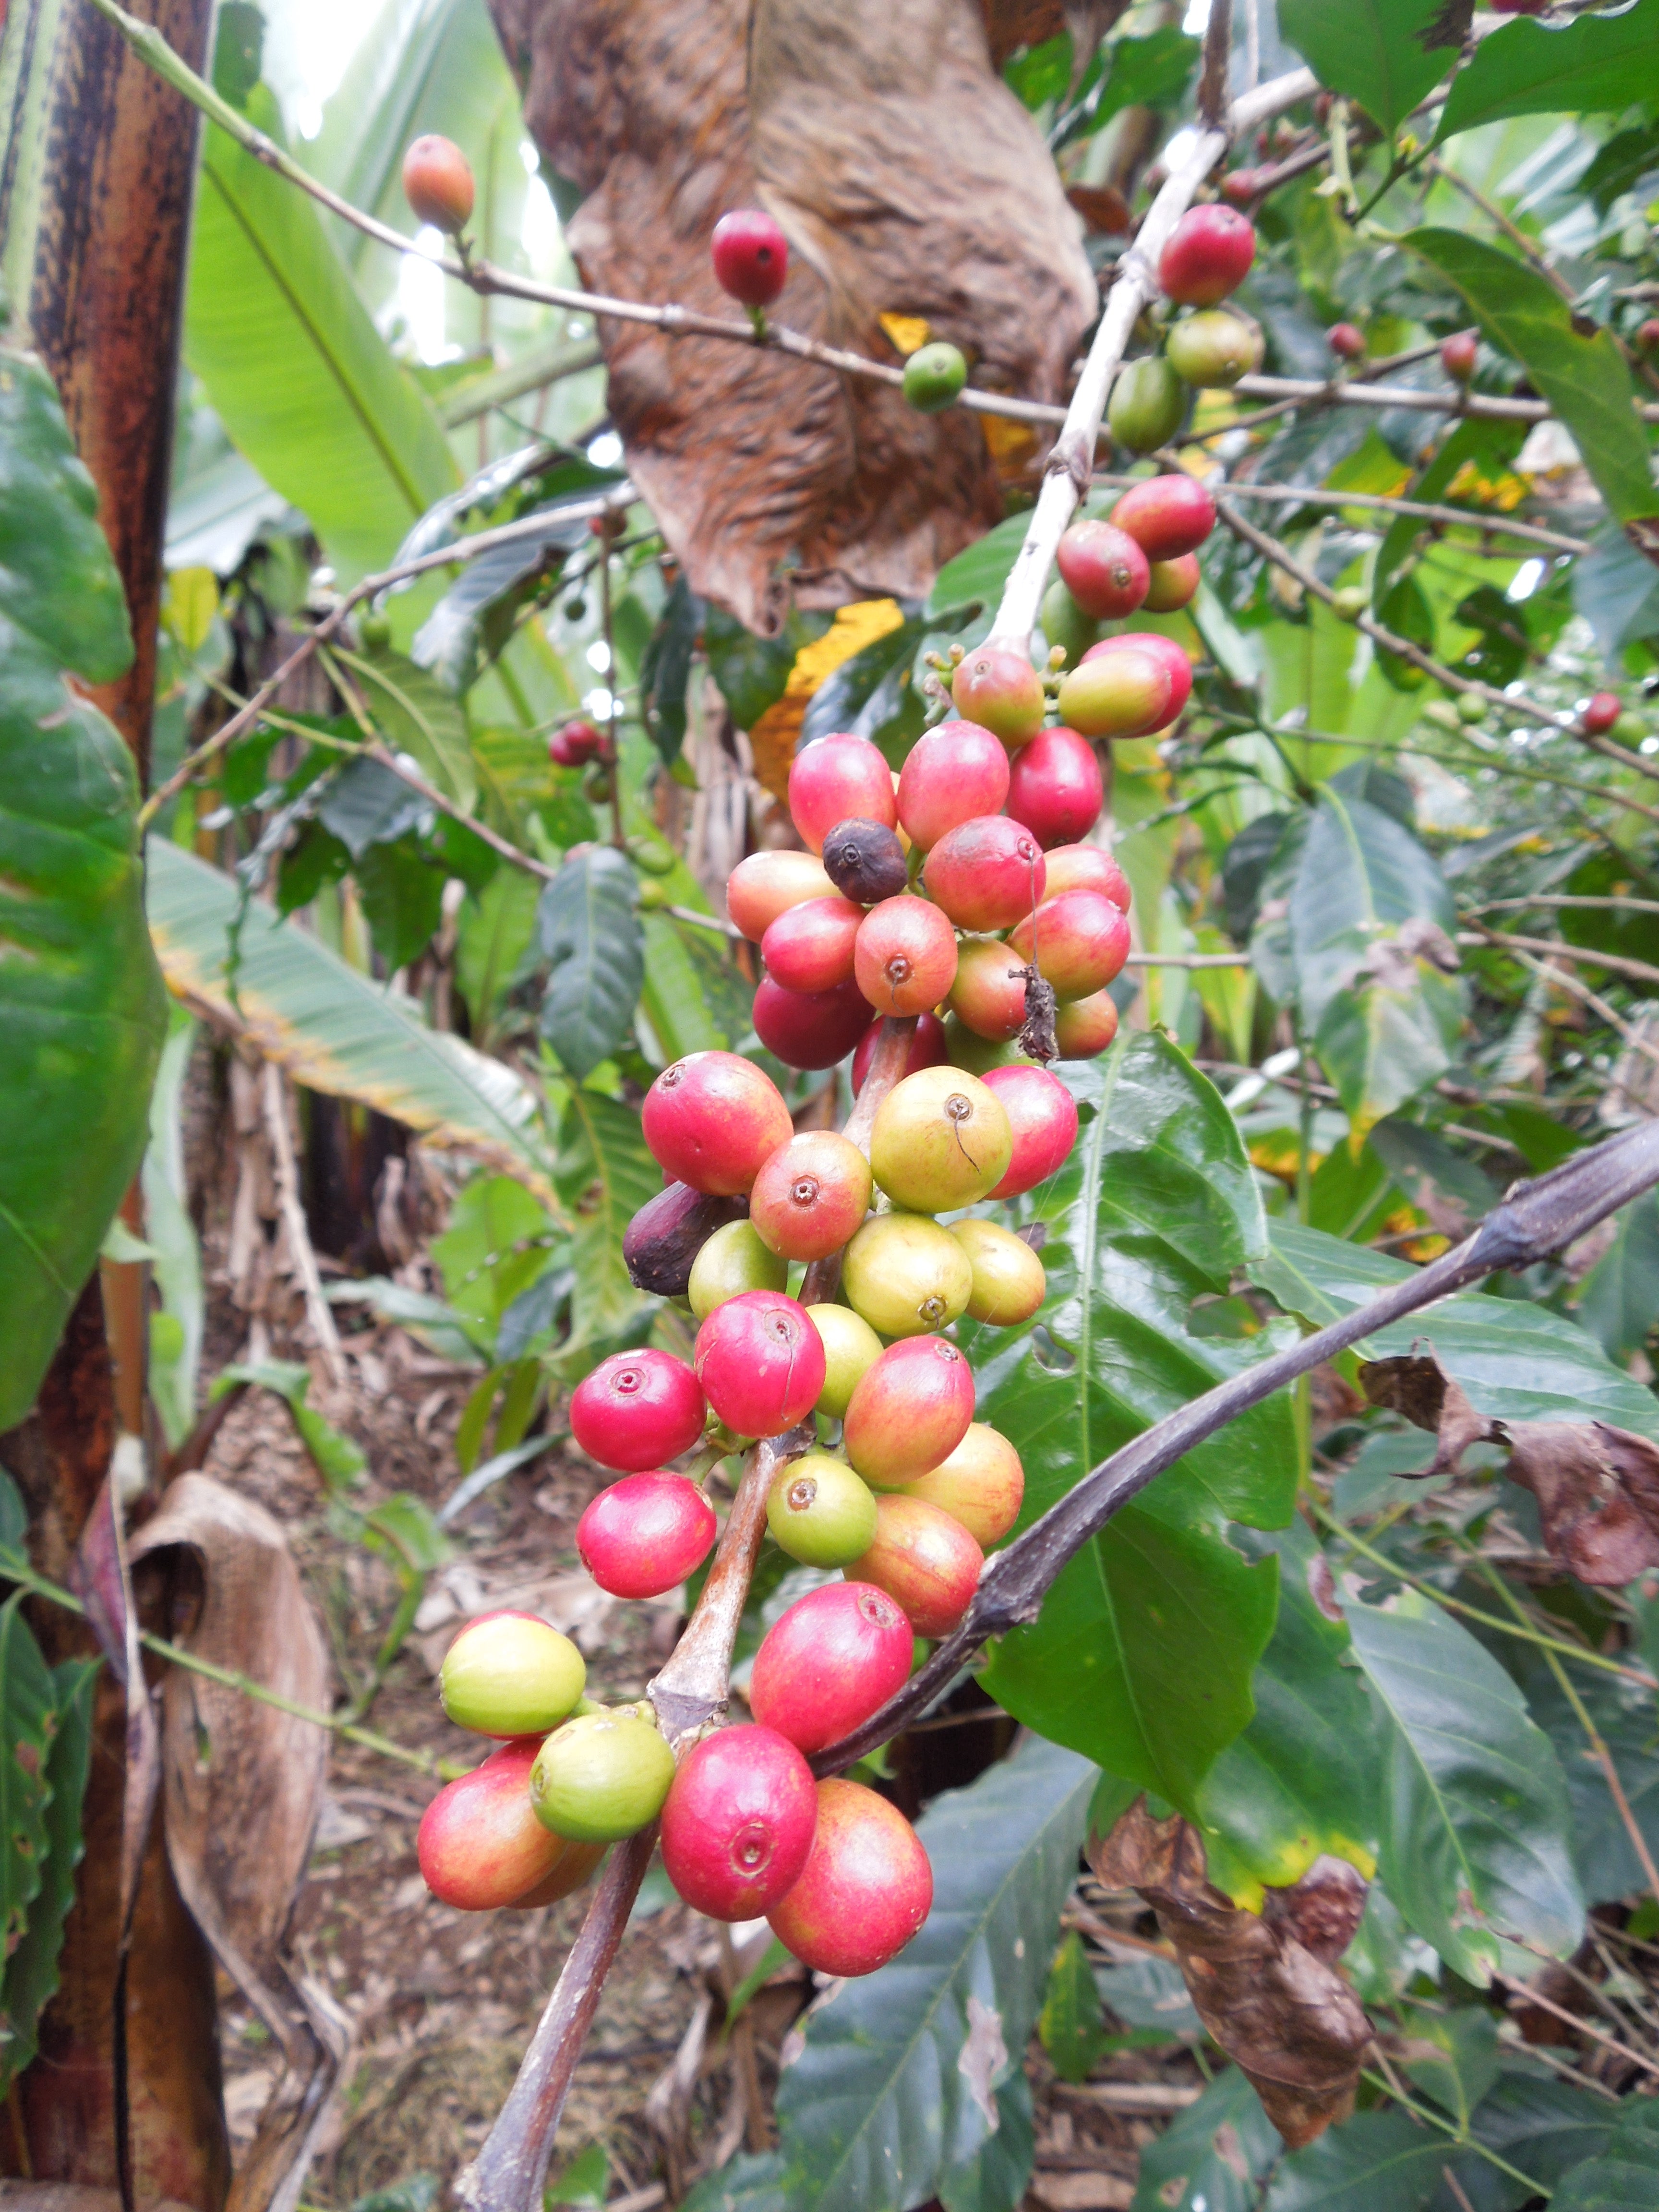 Destinations - Ethiopian Sidamo Single Origin Coffee